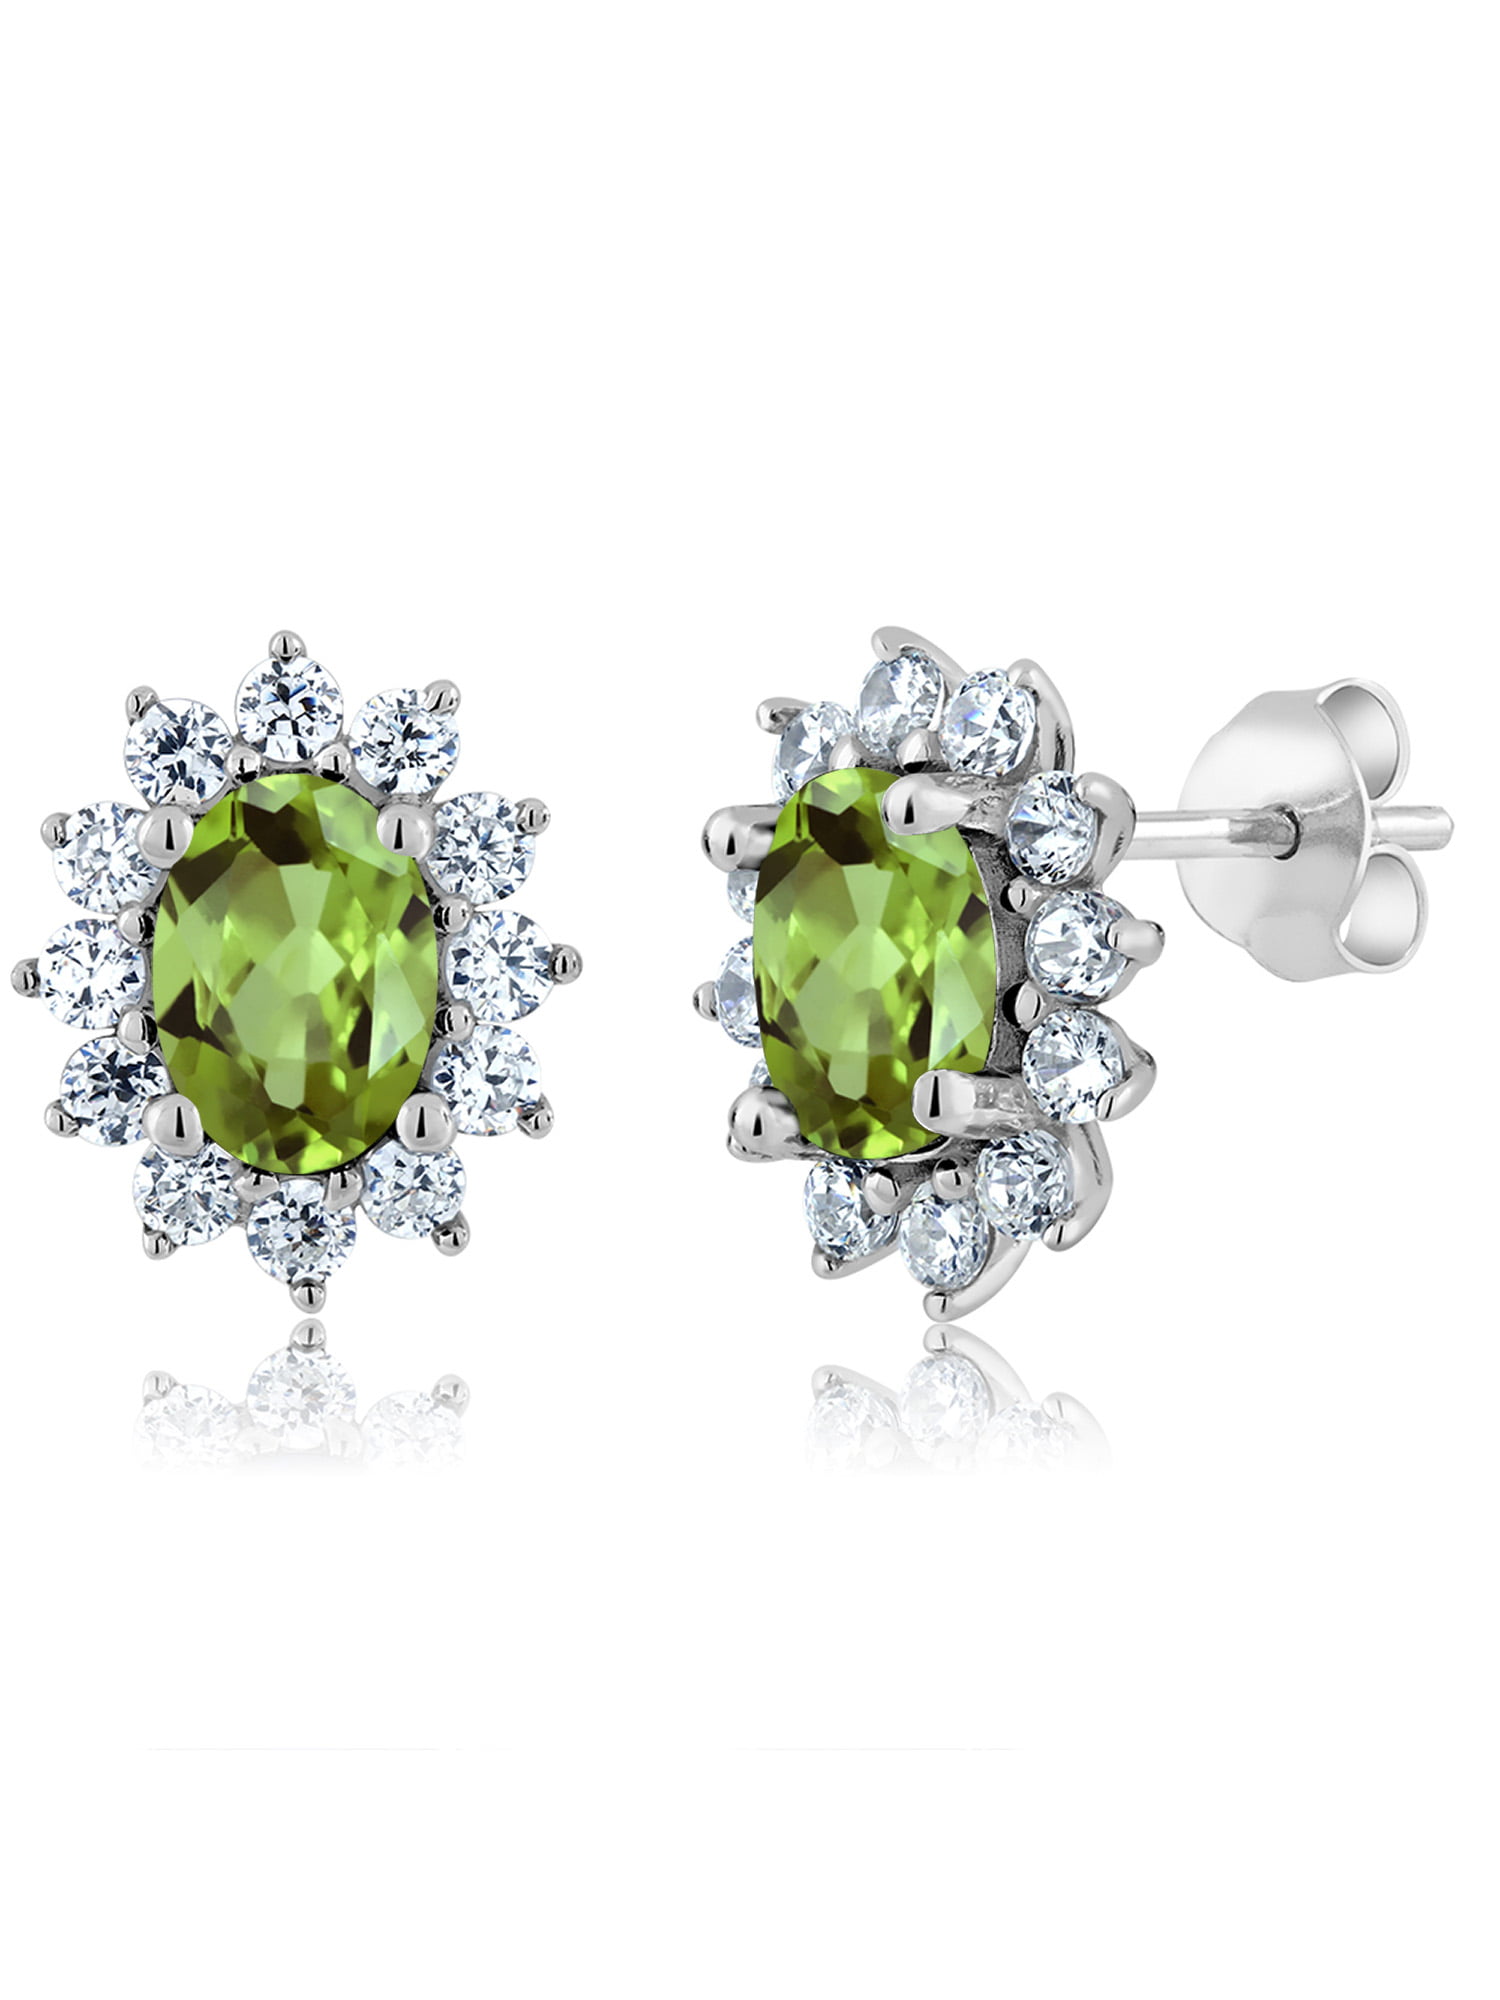 Kate Middleton Inspired 925 Silver Diamond Pendant Earrings Ring Jewelry Set